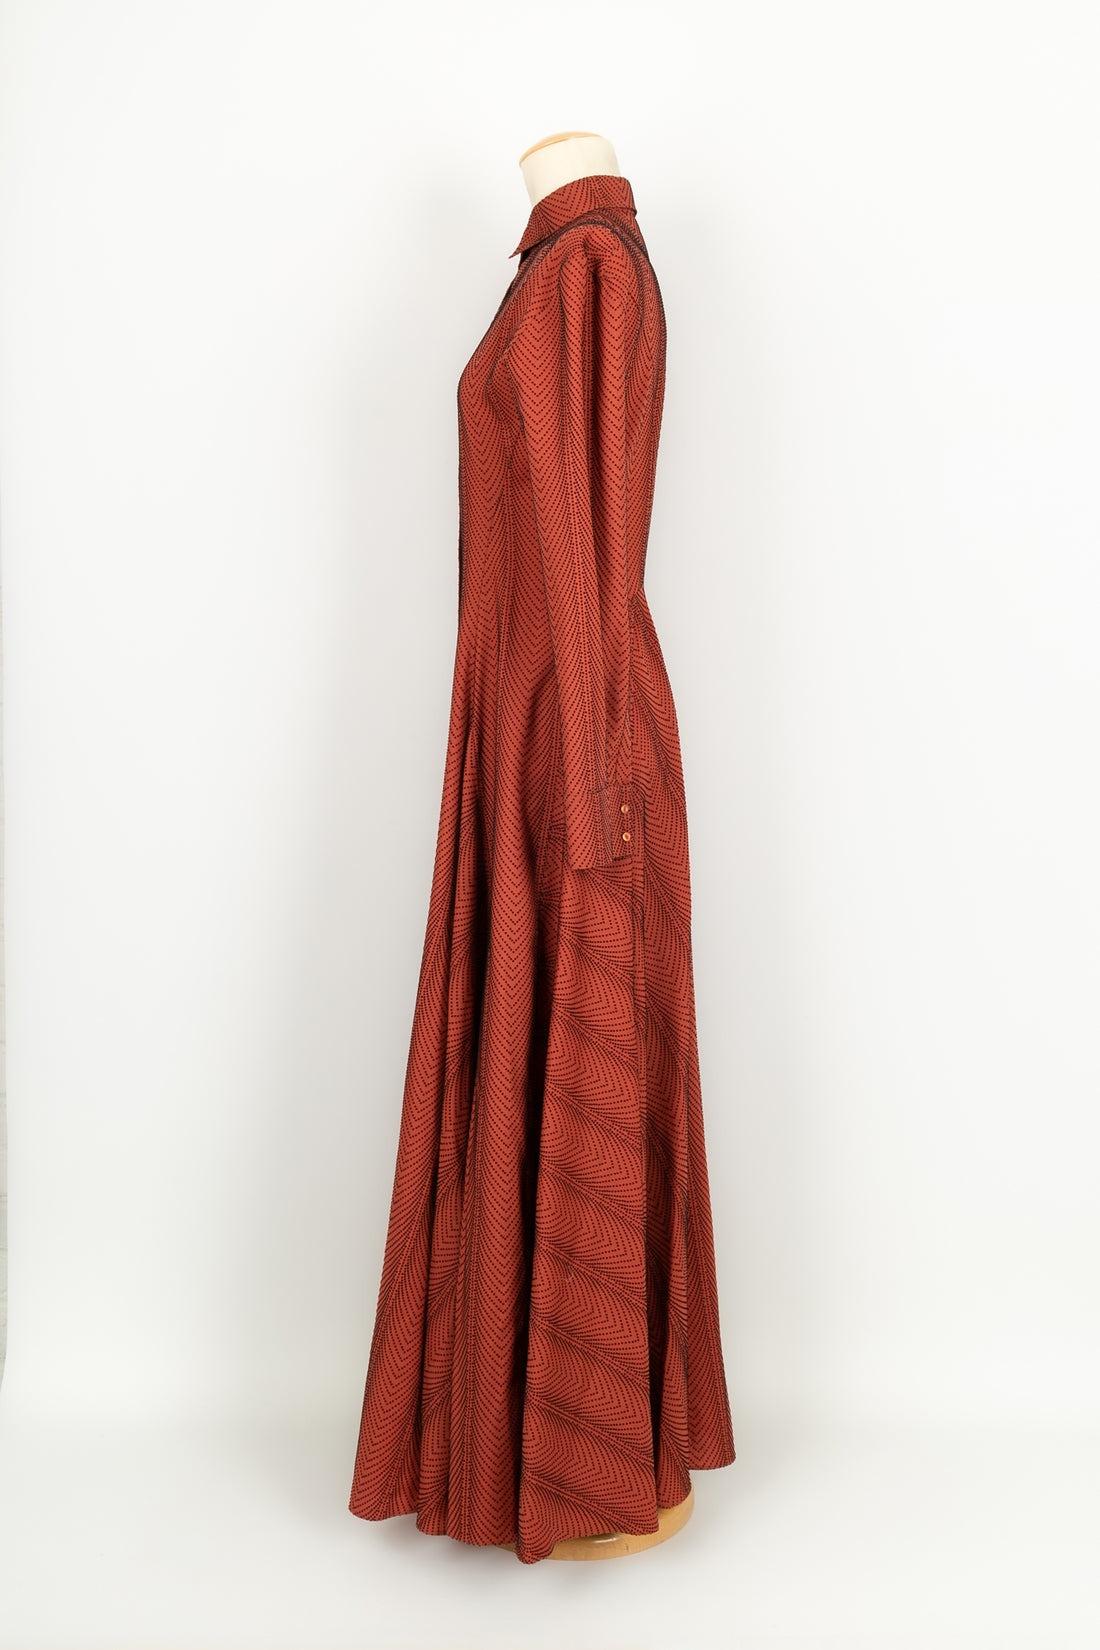 Women's Alaïa Long Flared Dress in Brown/Orange Wool with Black Dots For Sale